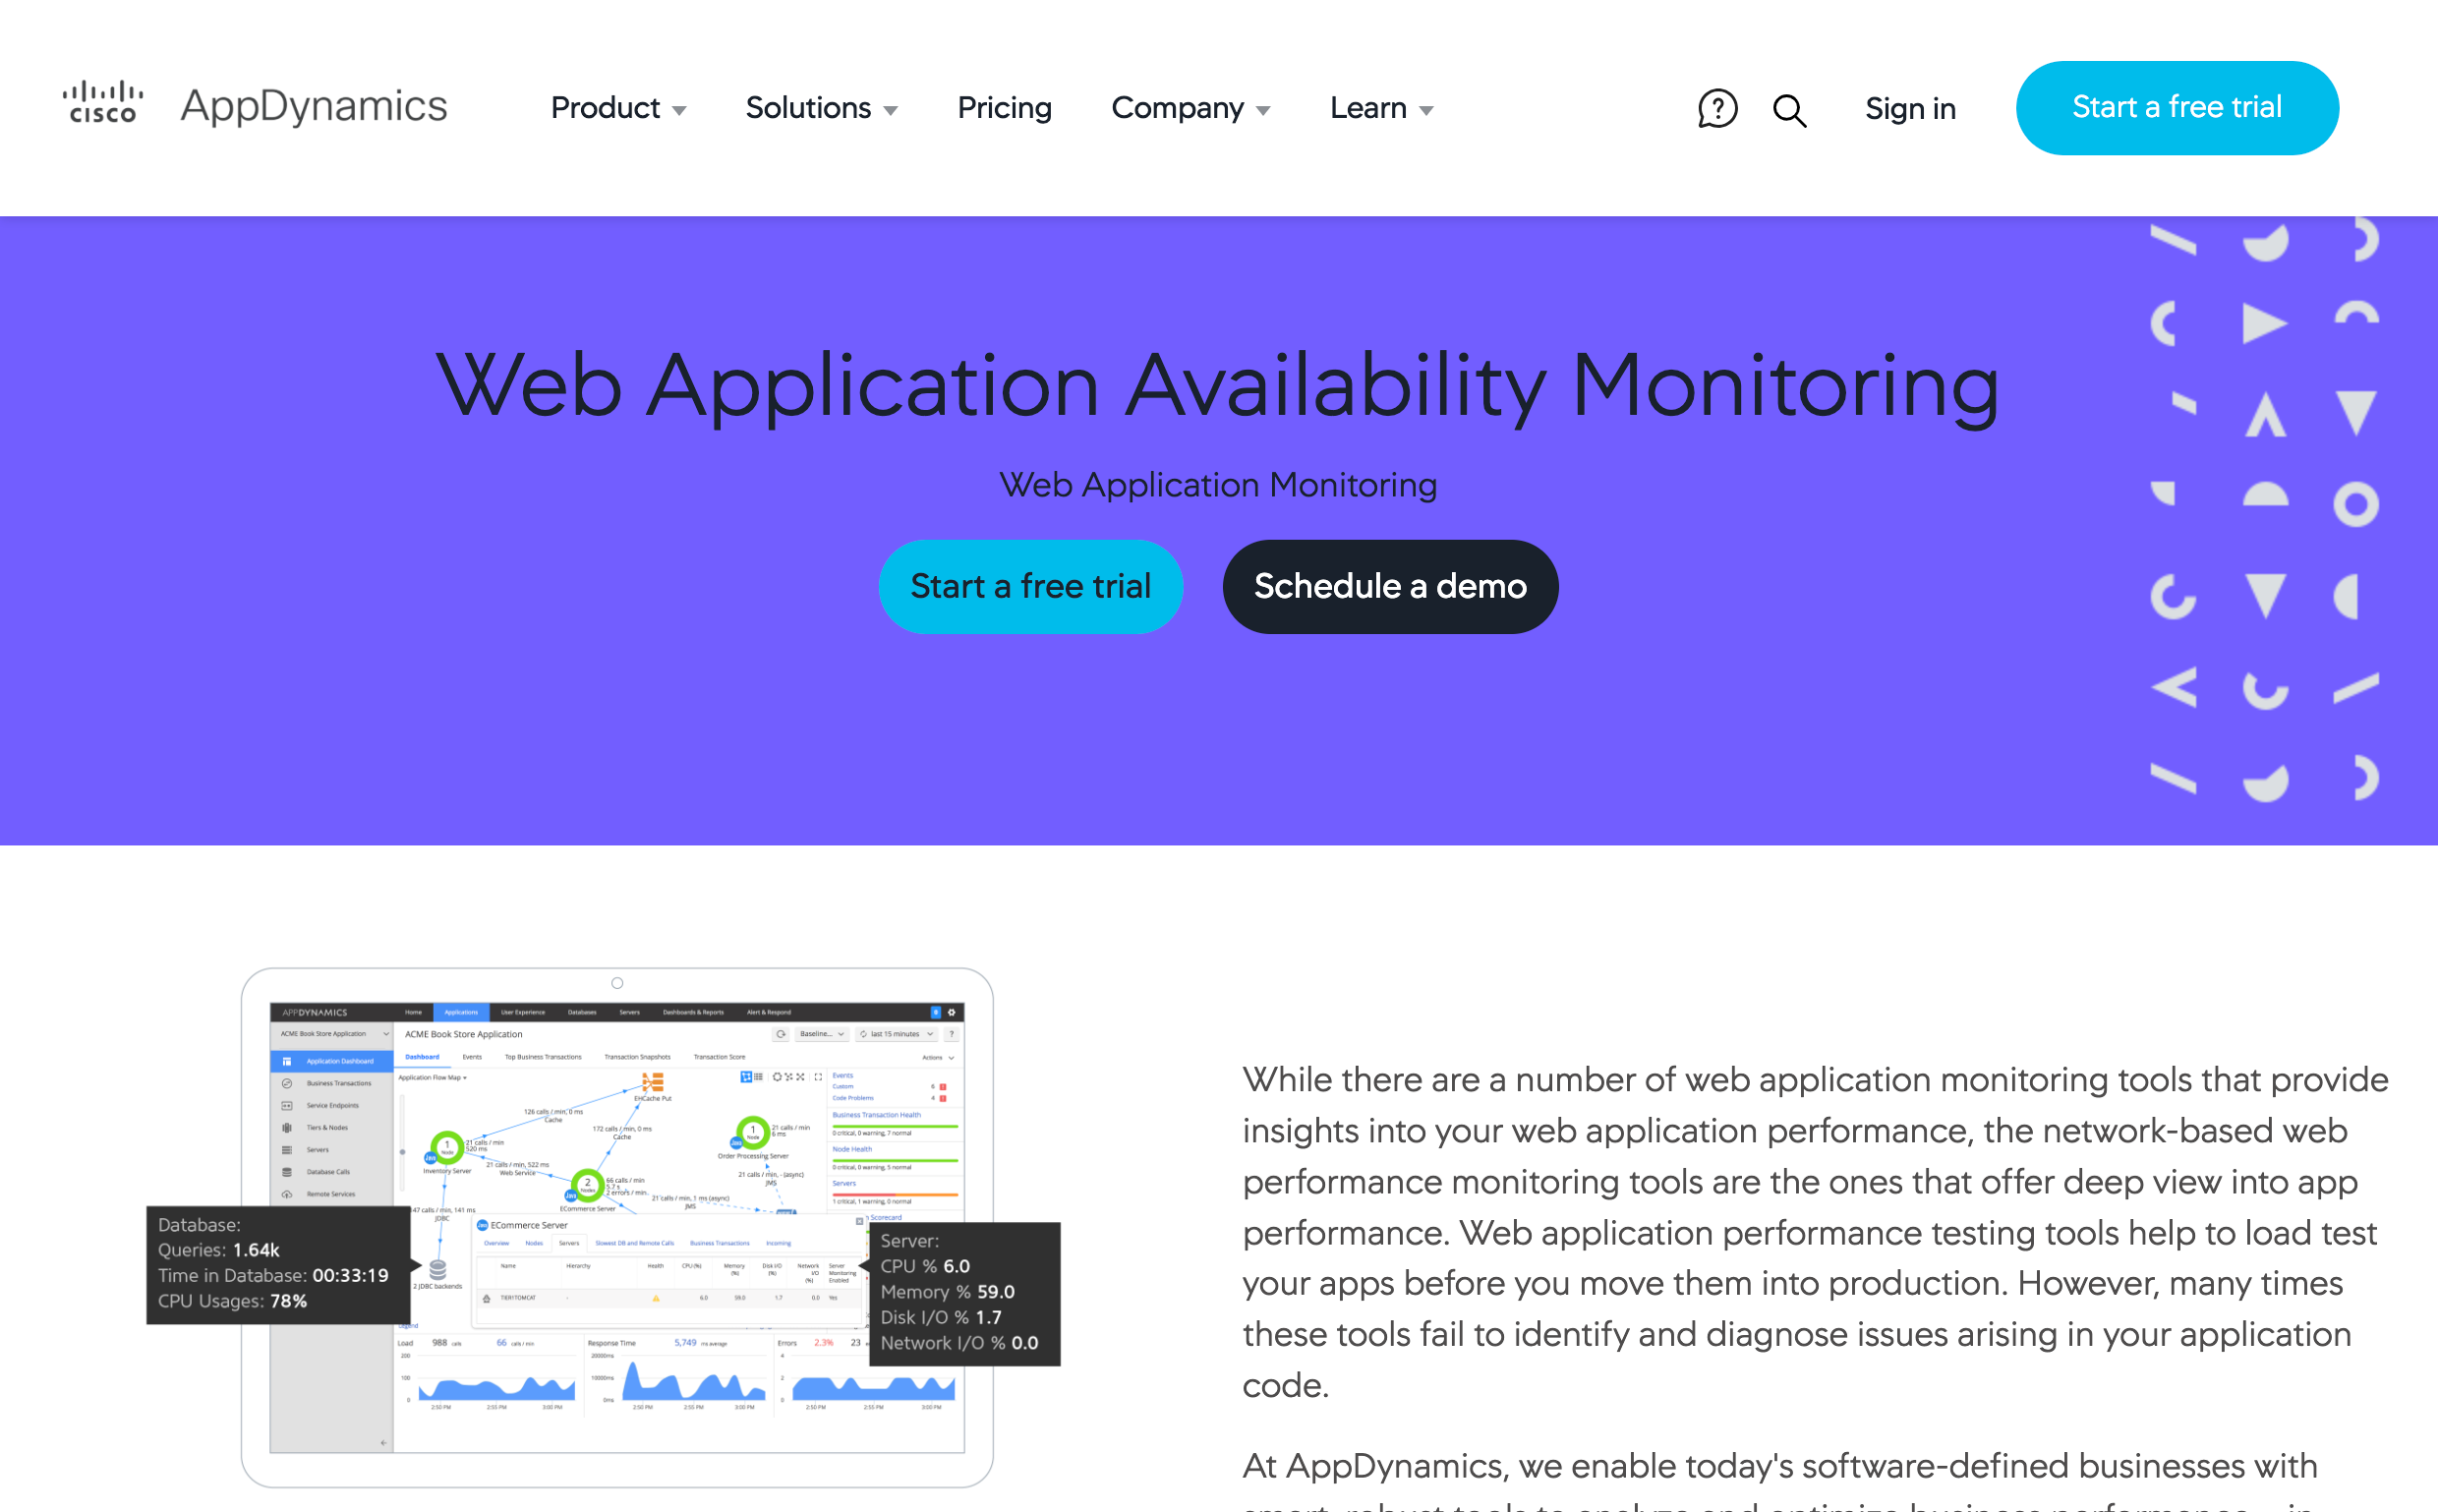 AppDynamics web application monitoring